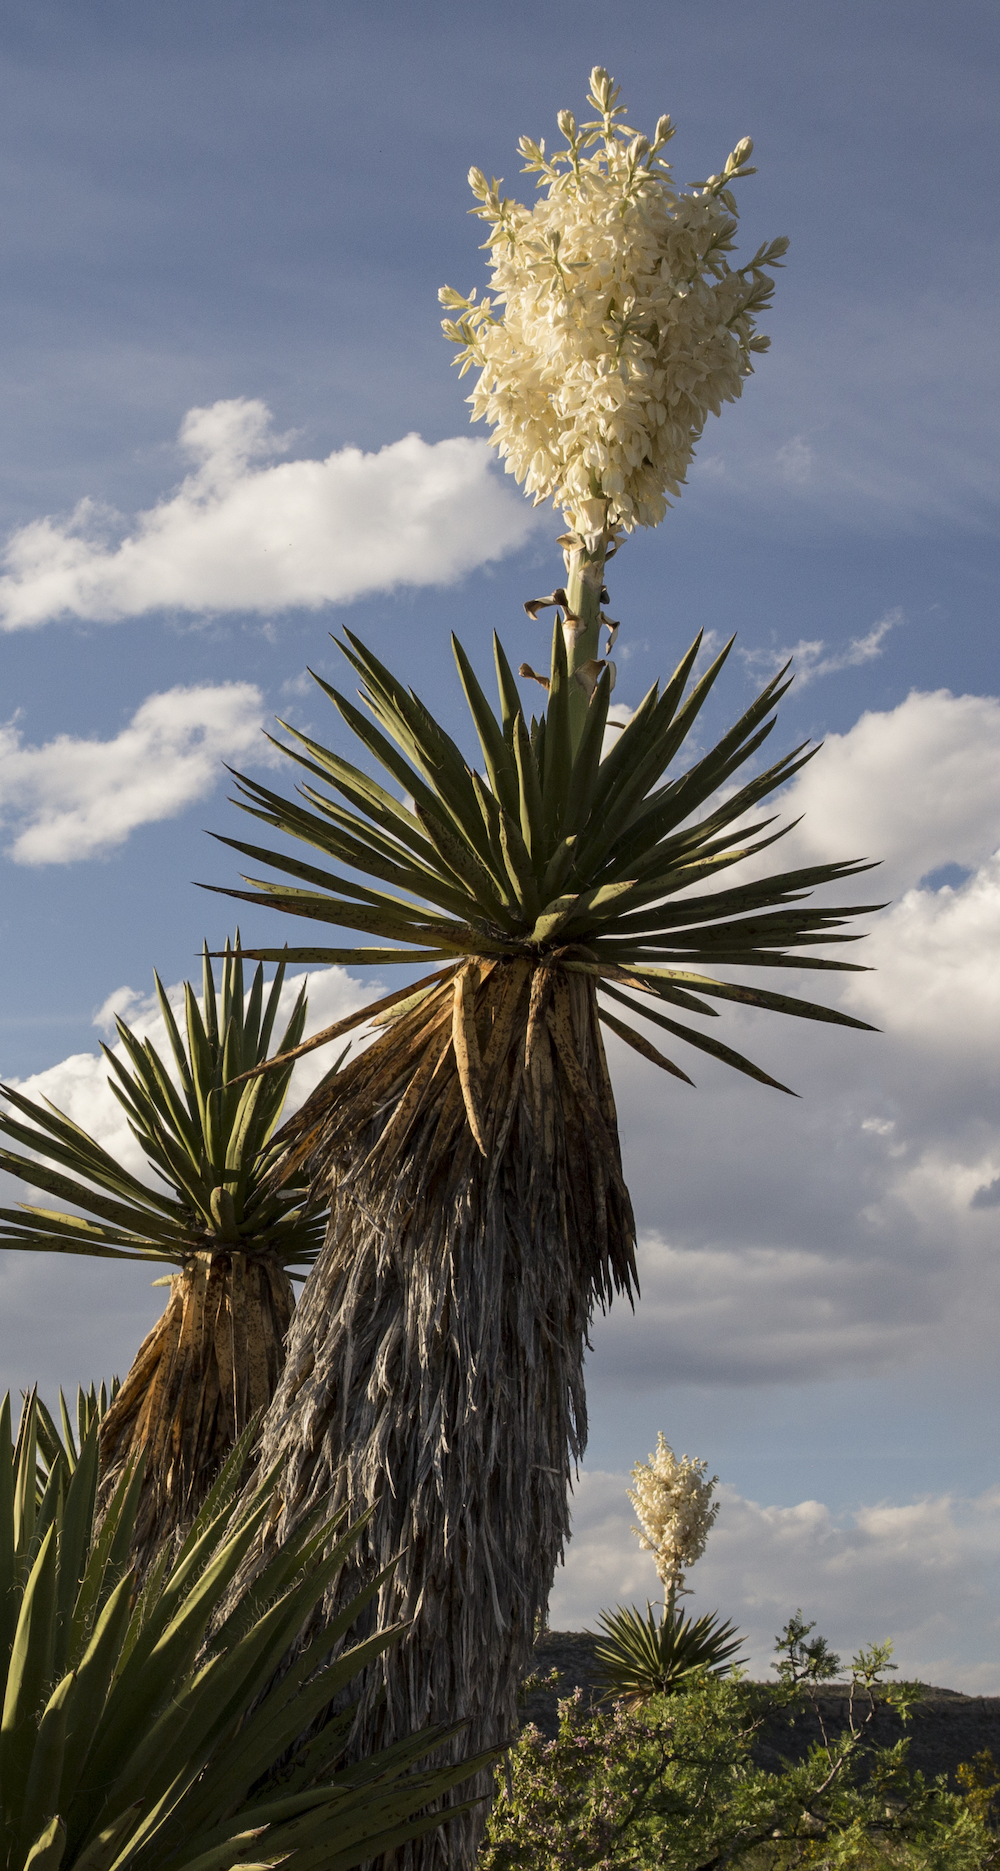 Giant Dagger Yucca photo by Al Braden